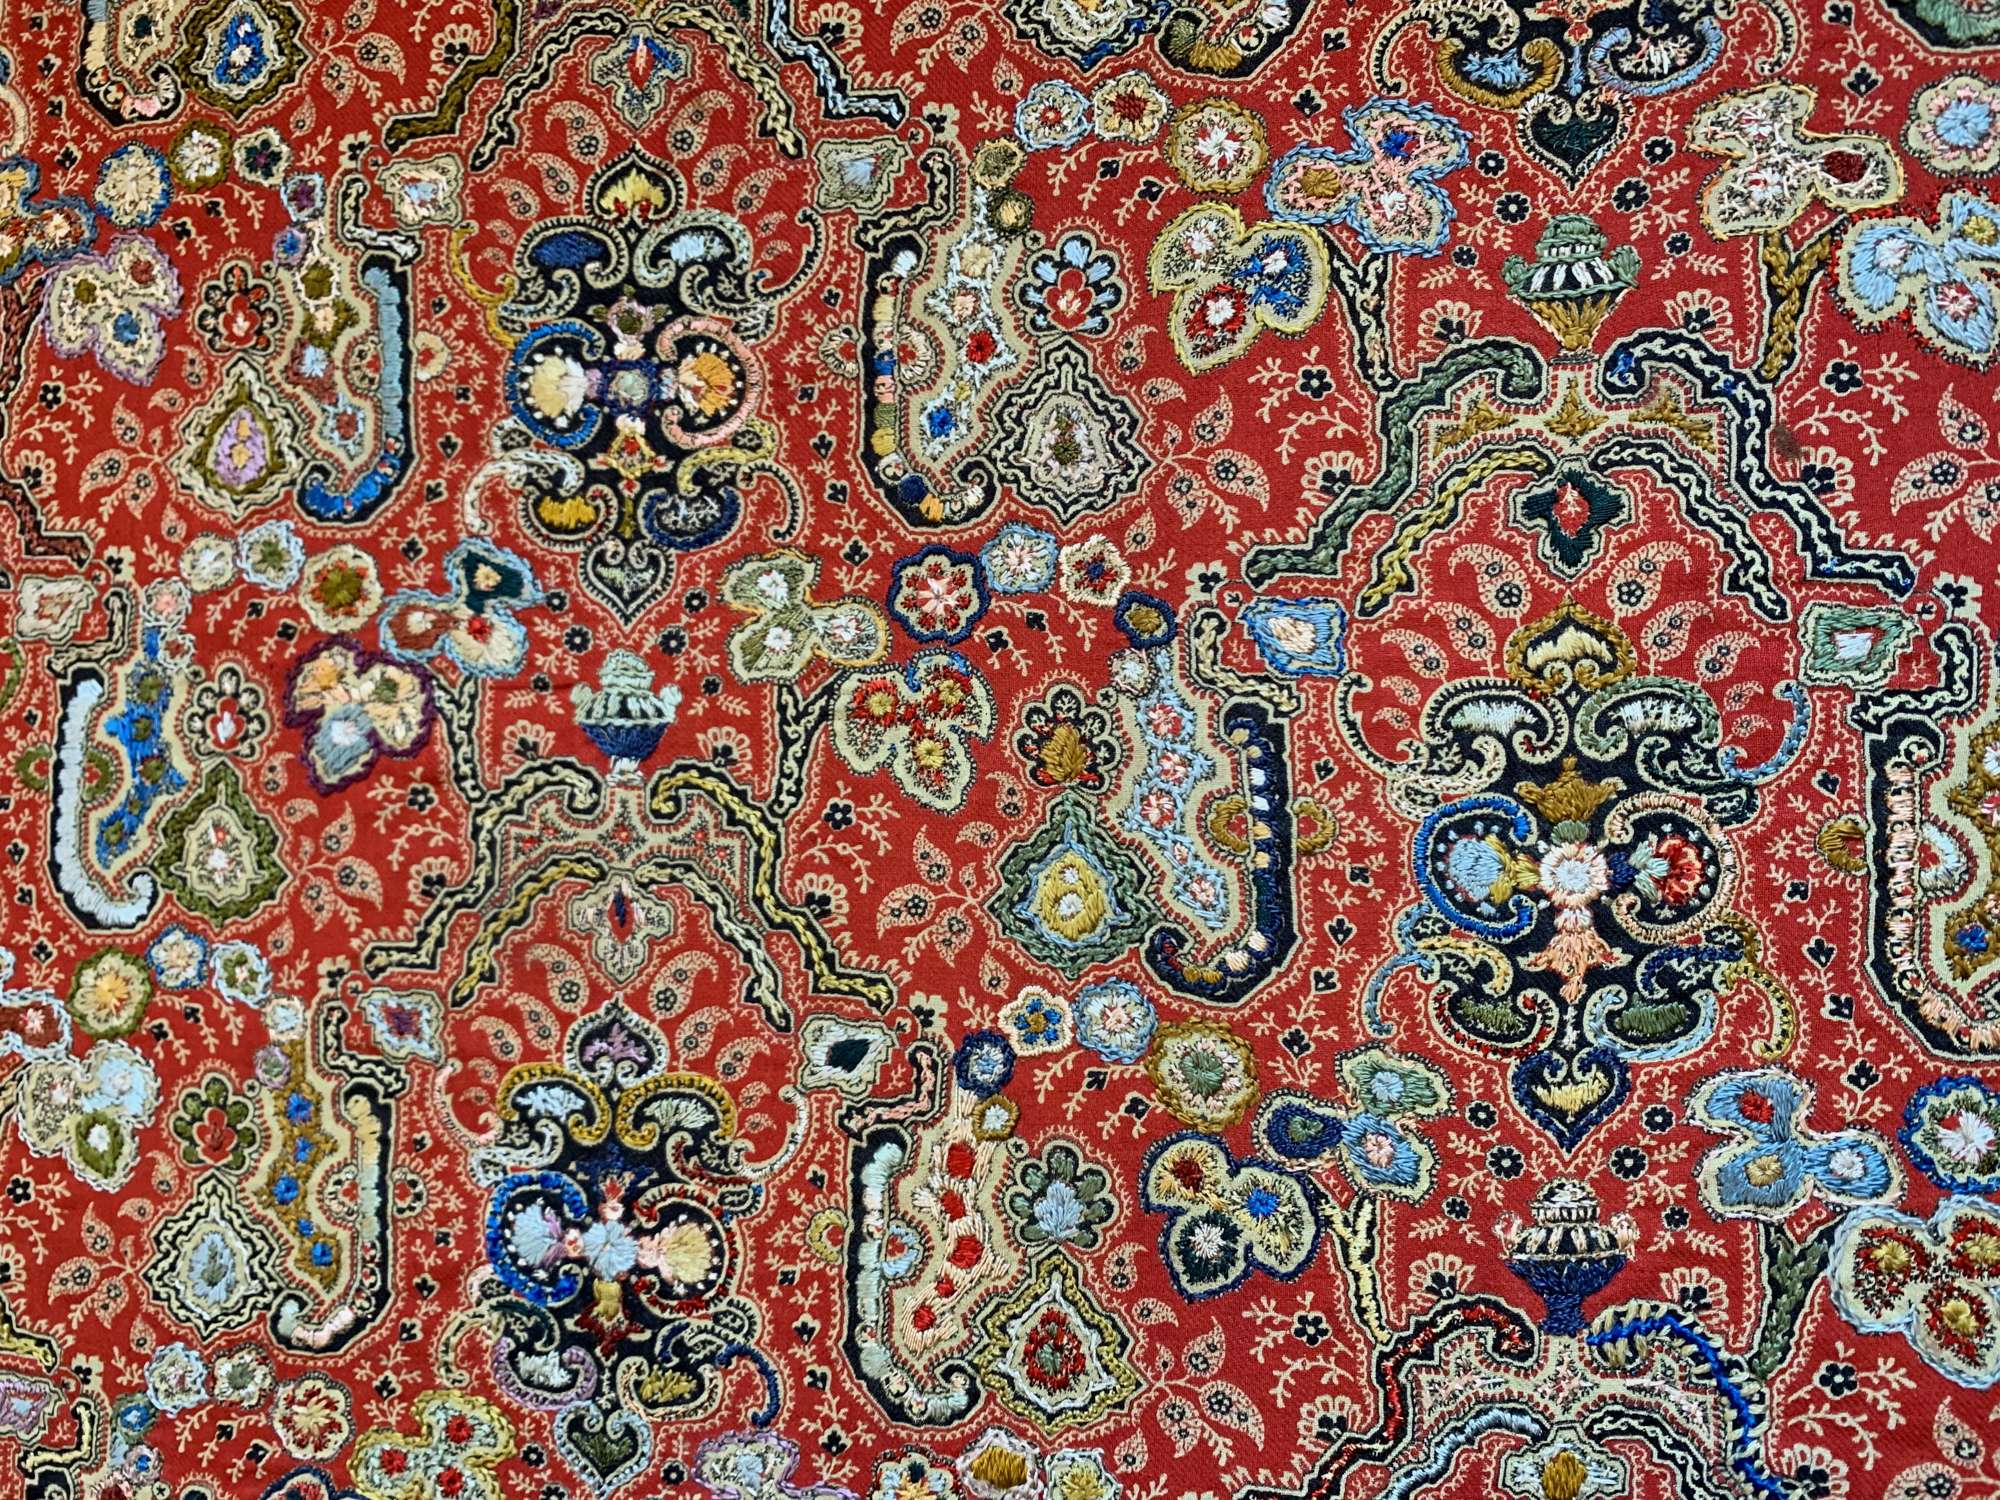 Embroidered Kashmir textile